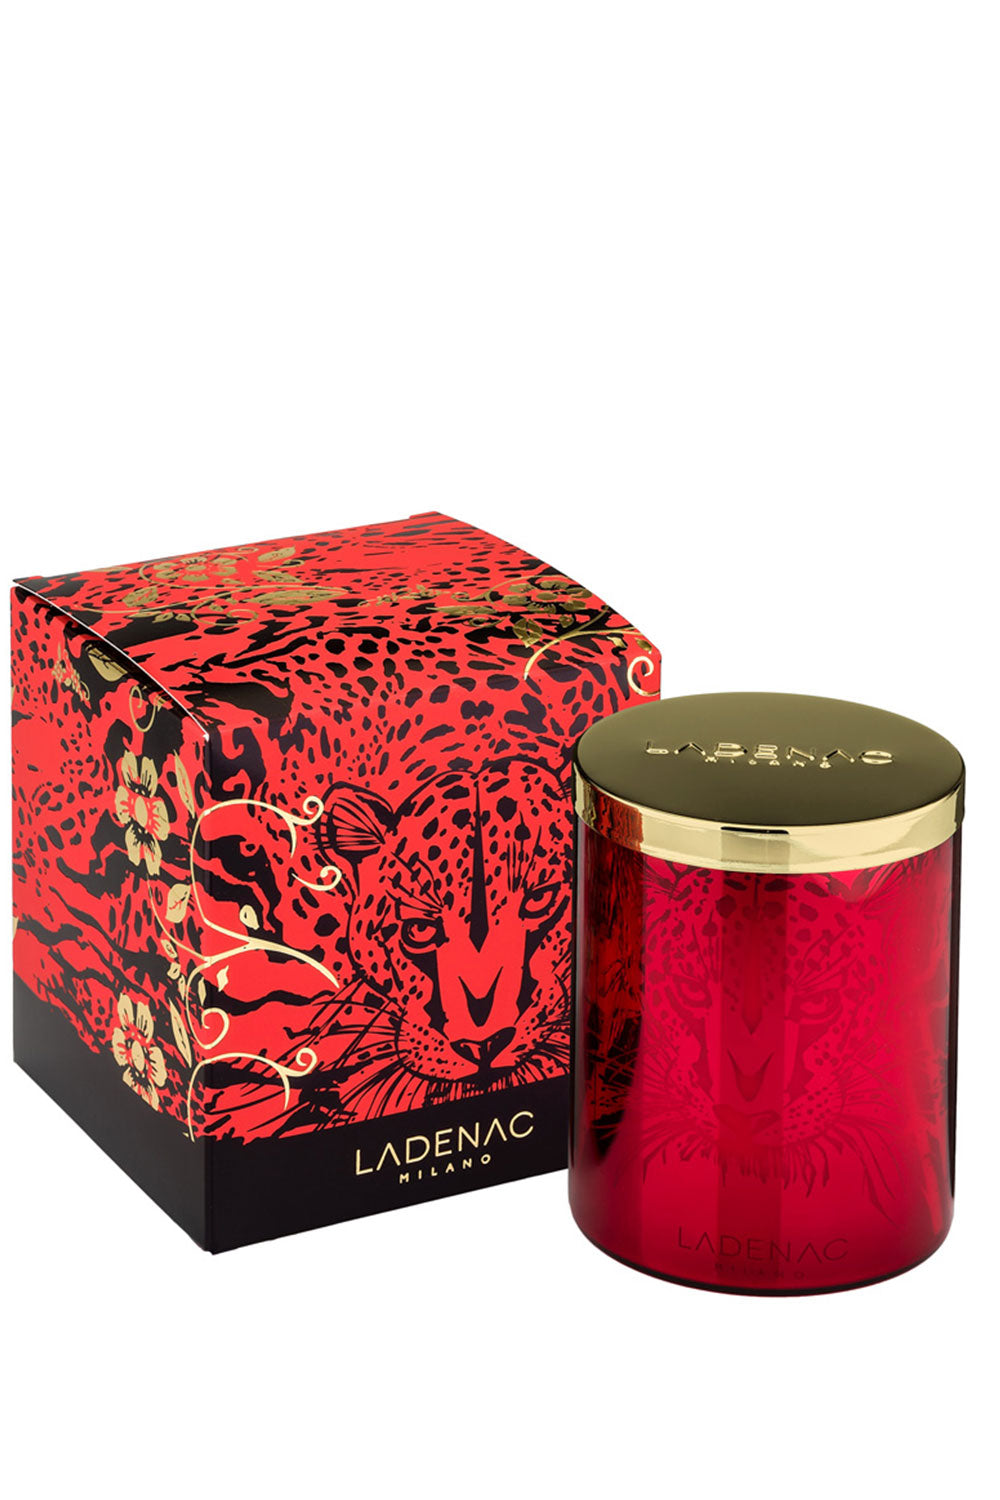 Africa Leopard Candle In Jar, 350 g